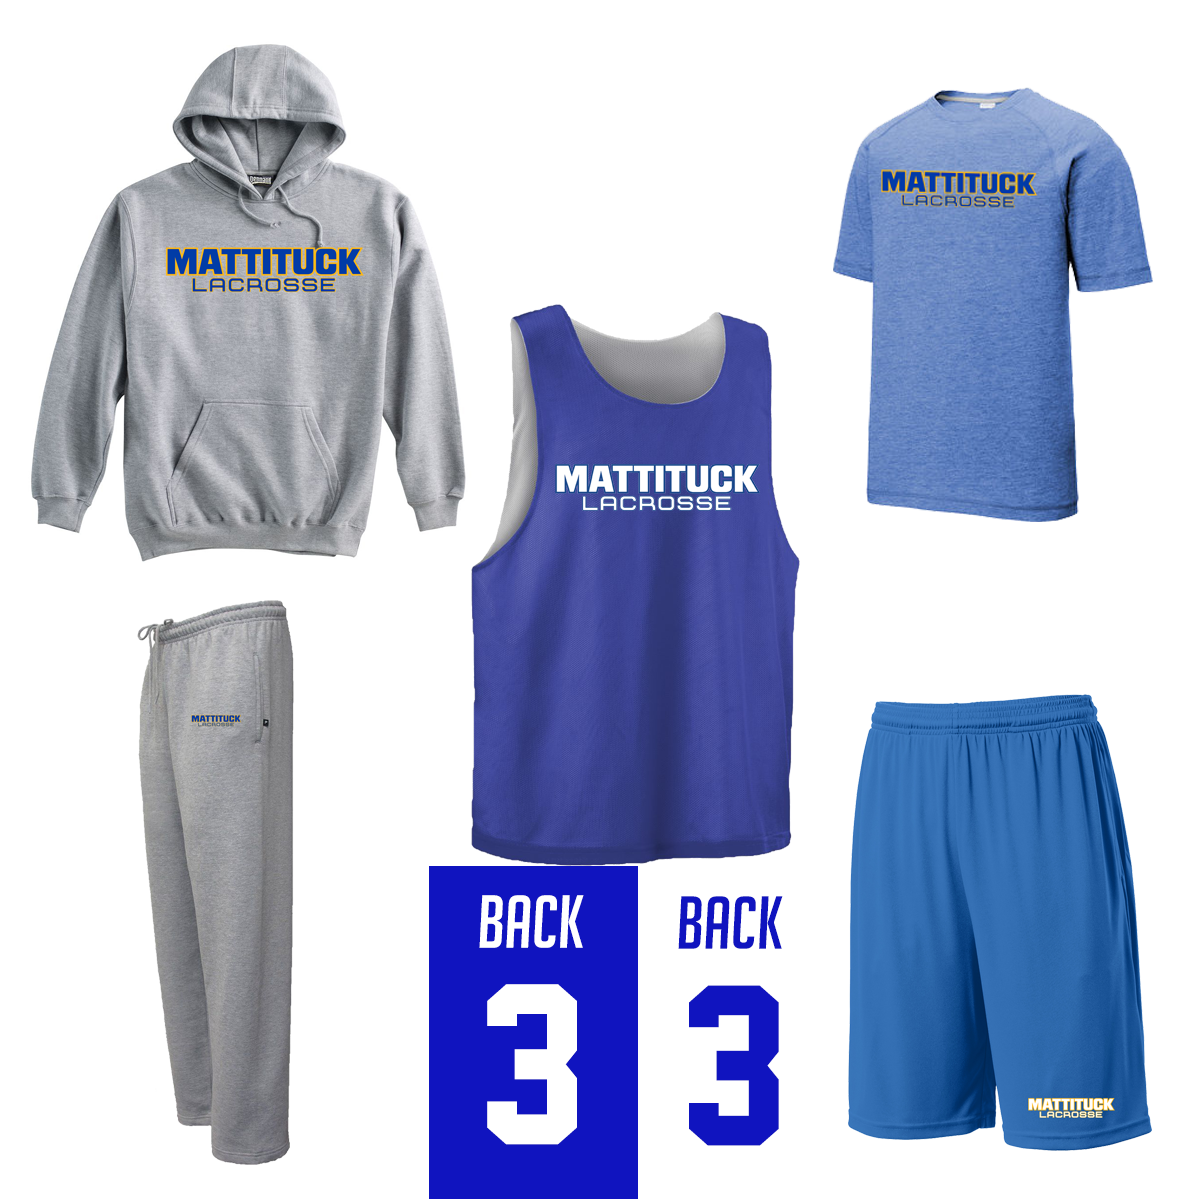 Mattituck Lacrosse Practice Package